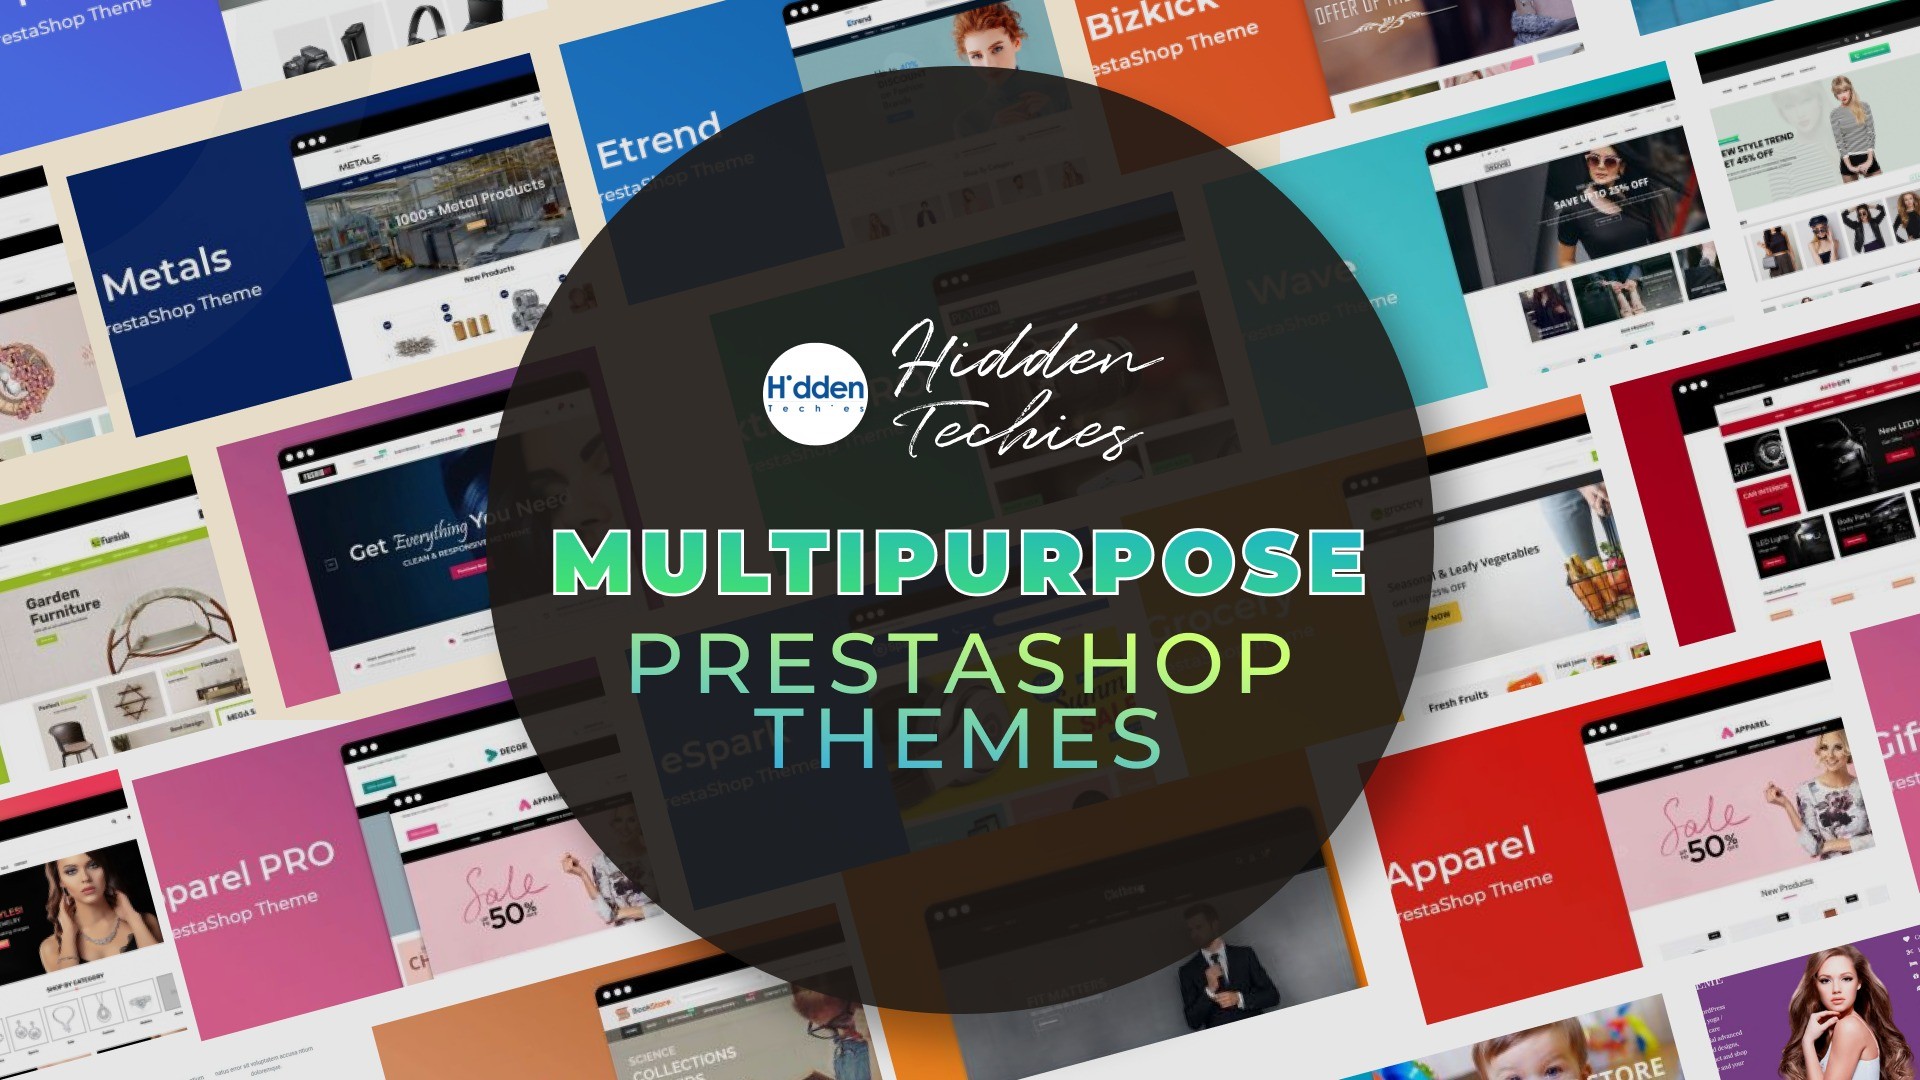 Hidden Techies Multipurpose PrestaShop Themes